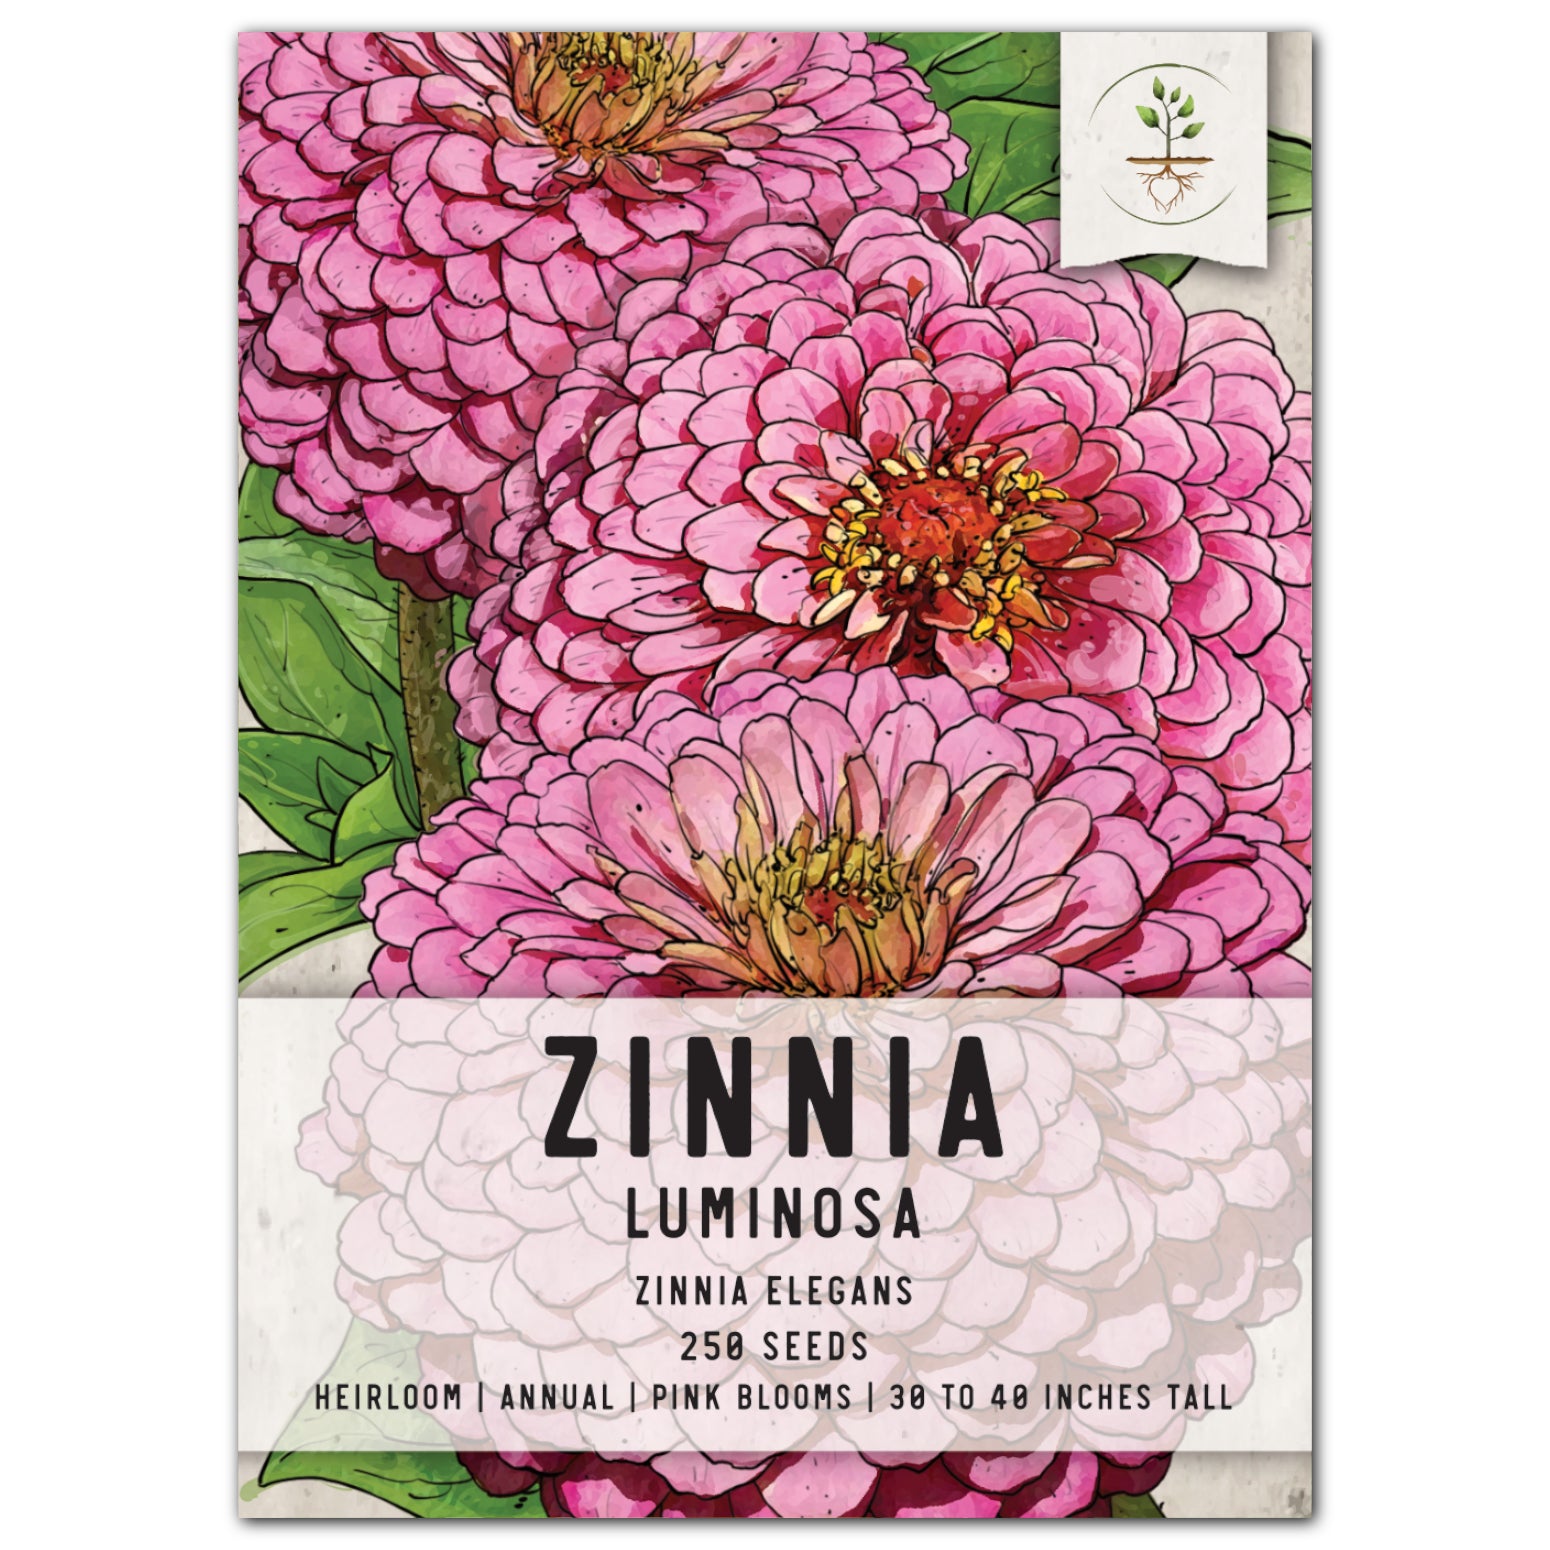 Luminosa Zinnia Seeds For Planting (Zinnia elegans)